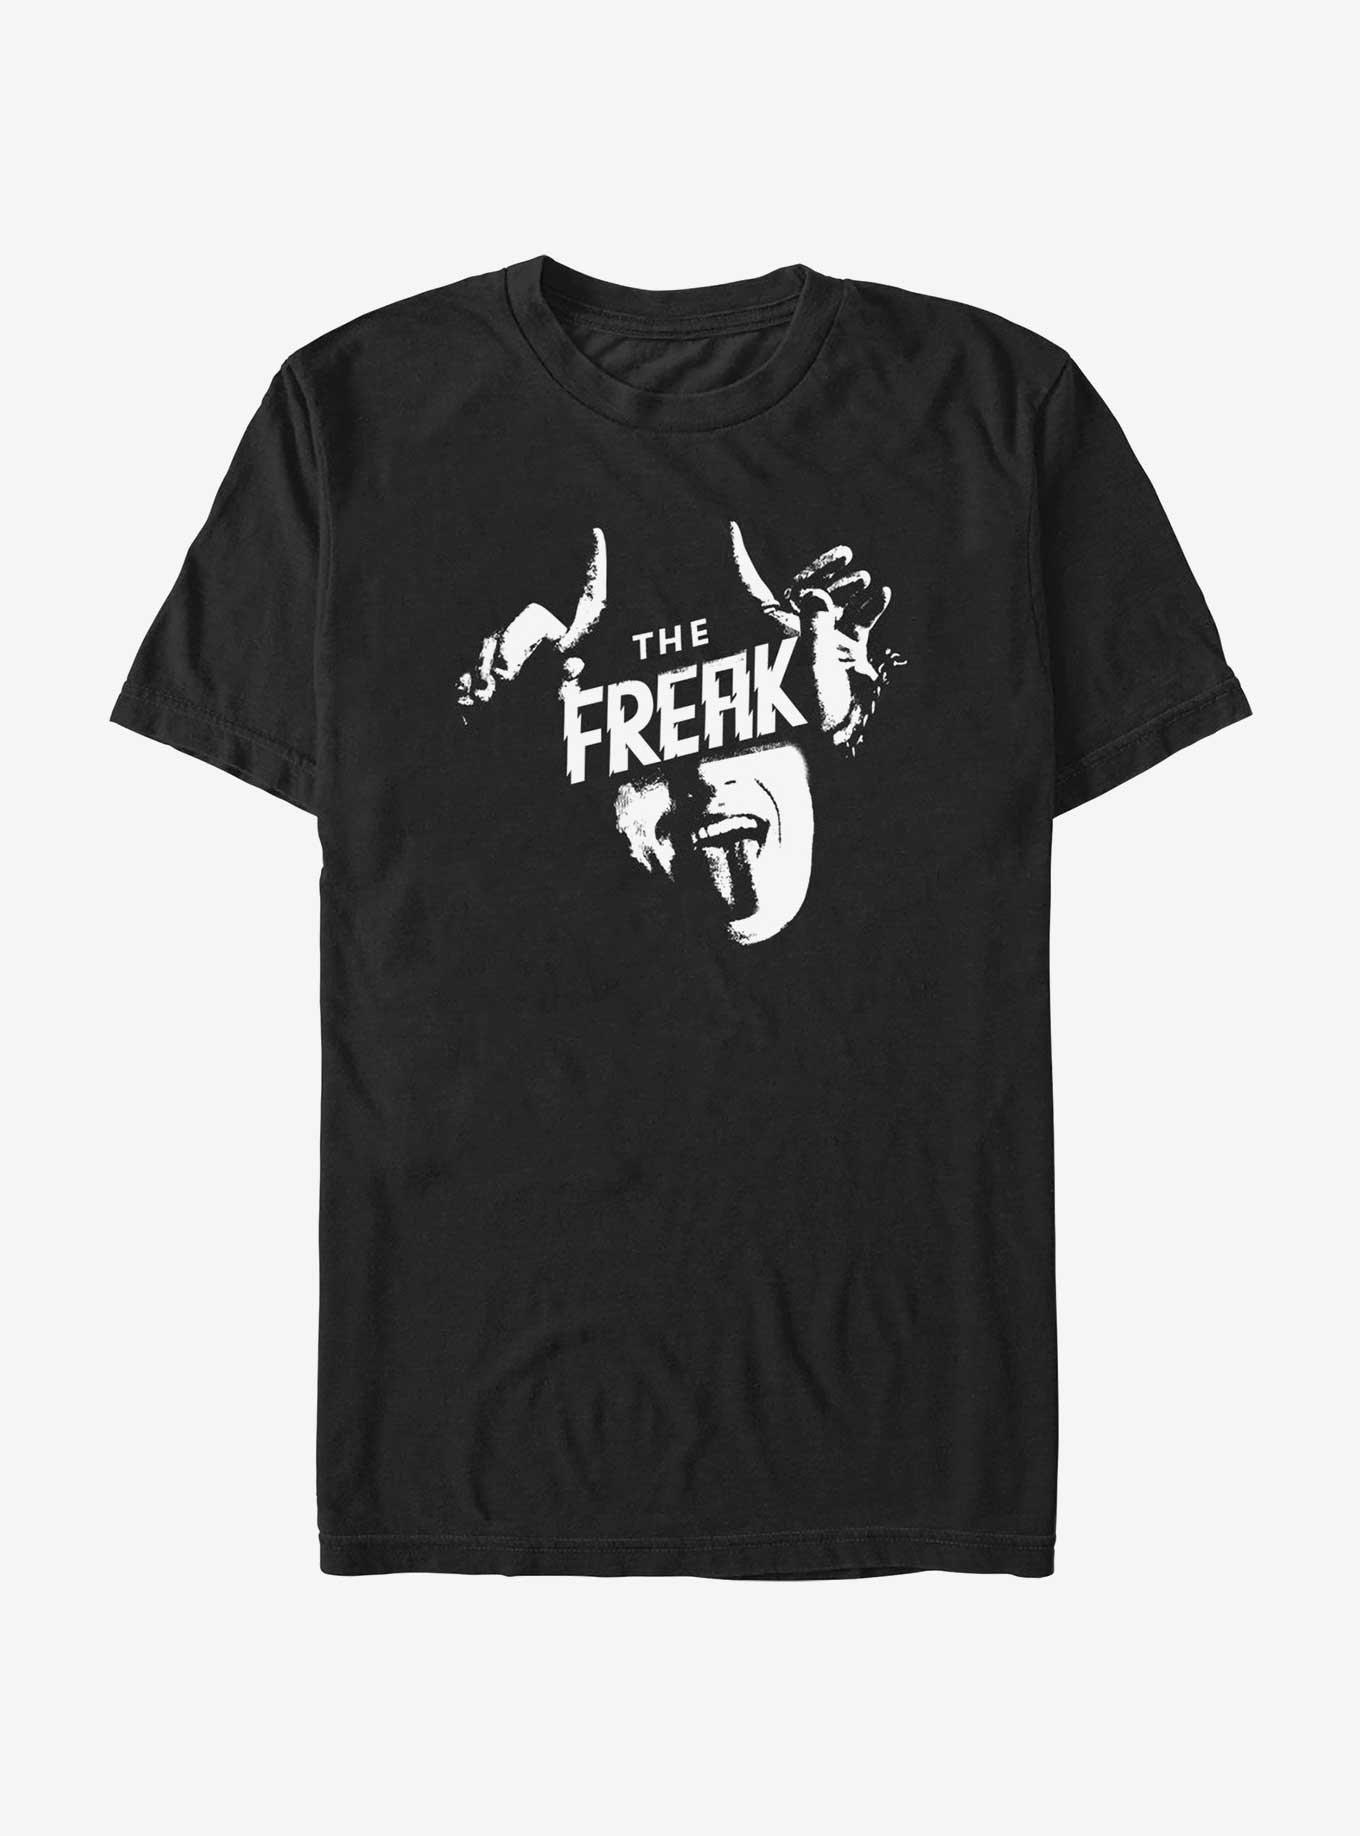 Stranger Things Freak Face Eddie Munson Extra Soft T-Shirt